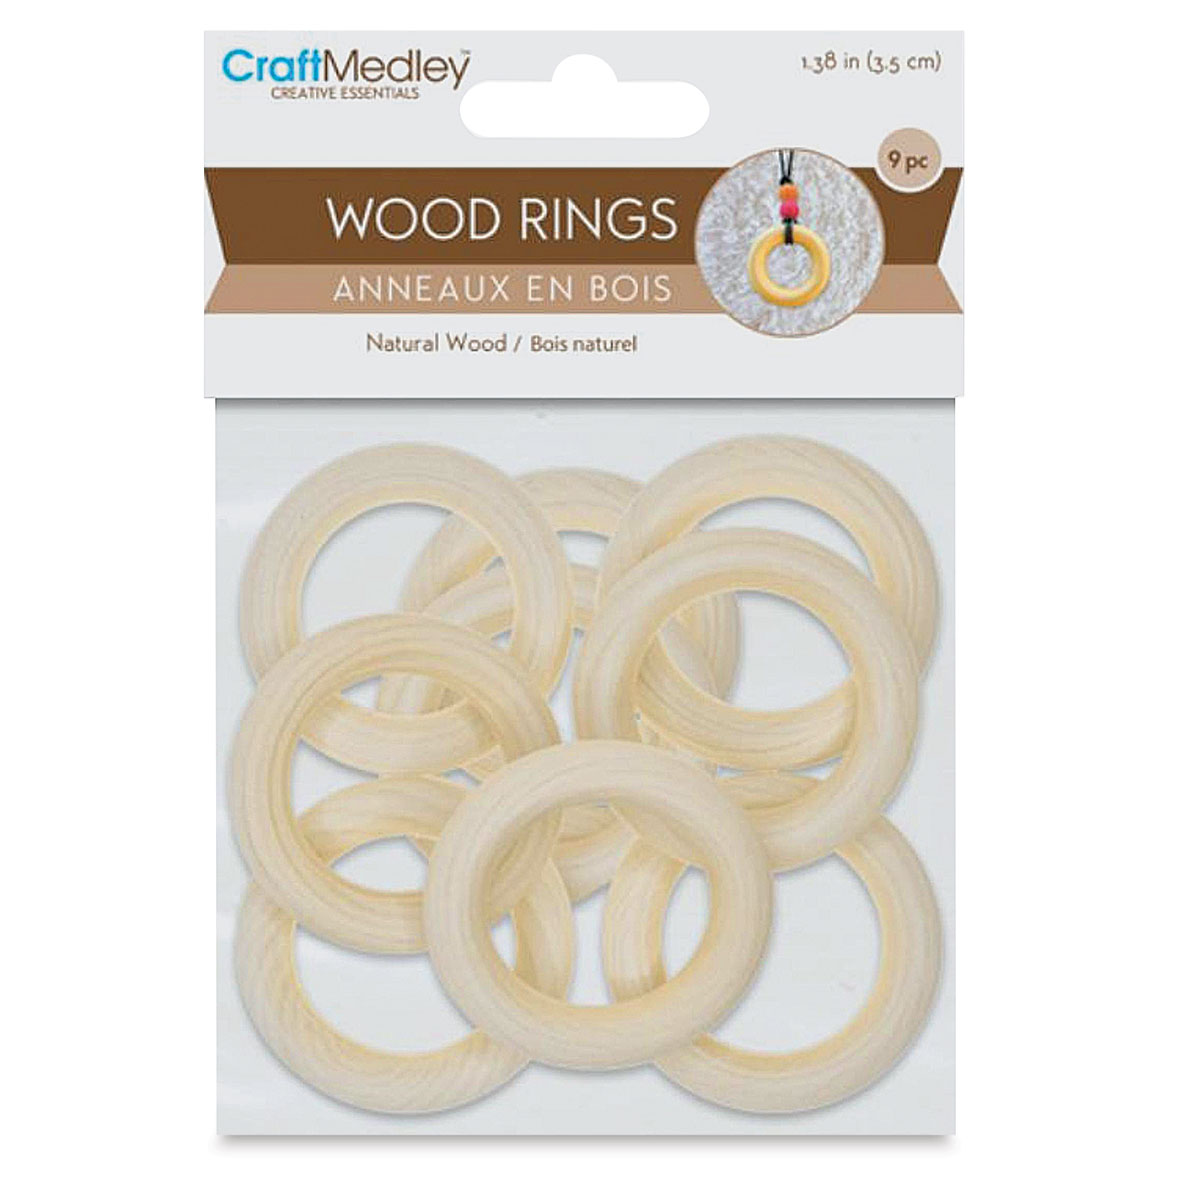 Craft Medley Wood Rings - 1.38, Pkg of 9